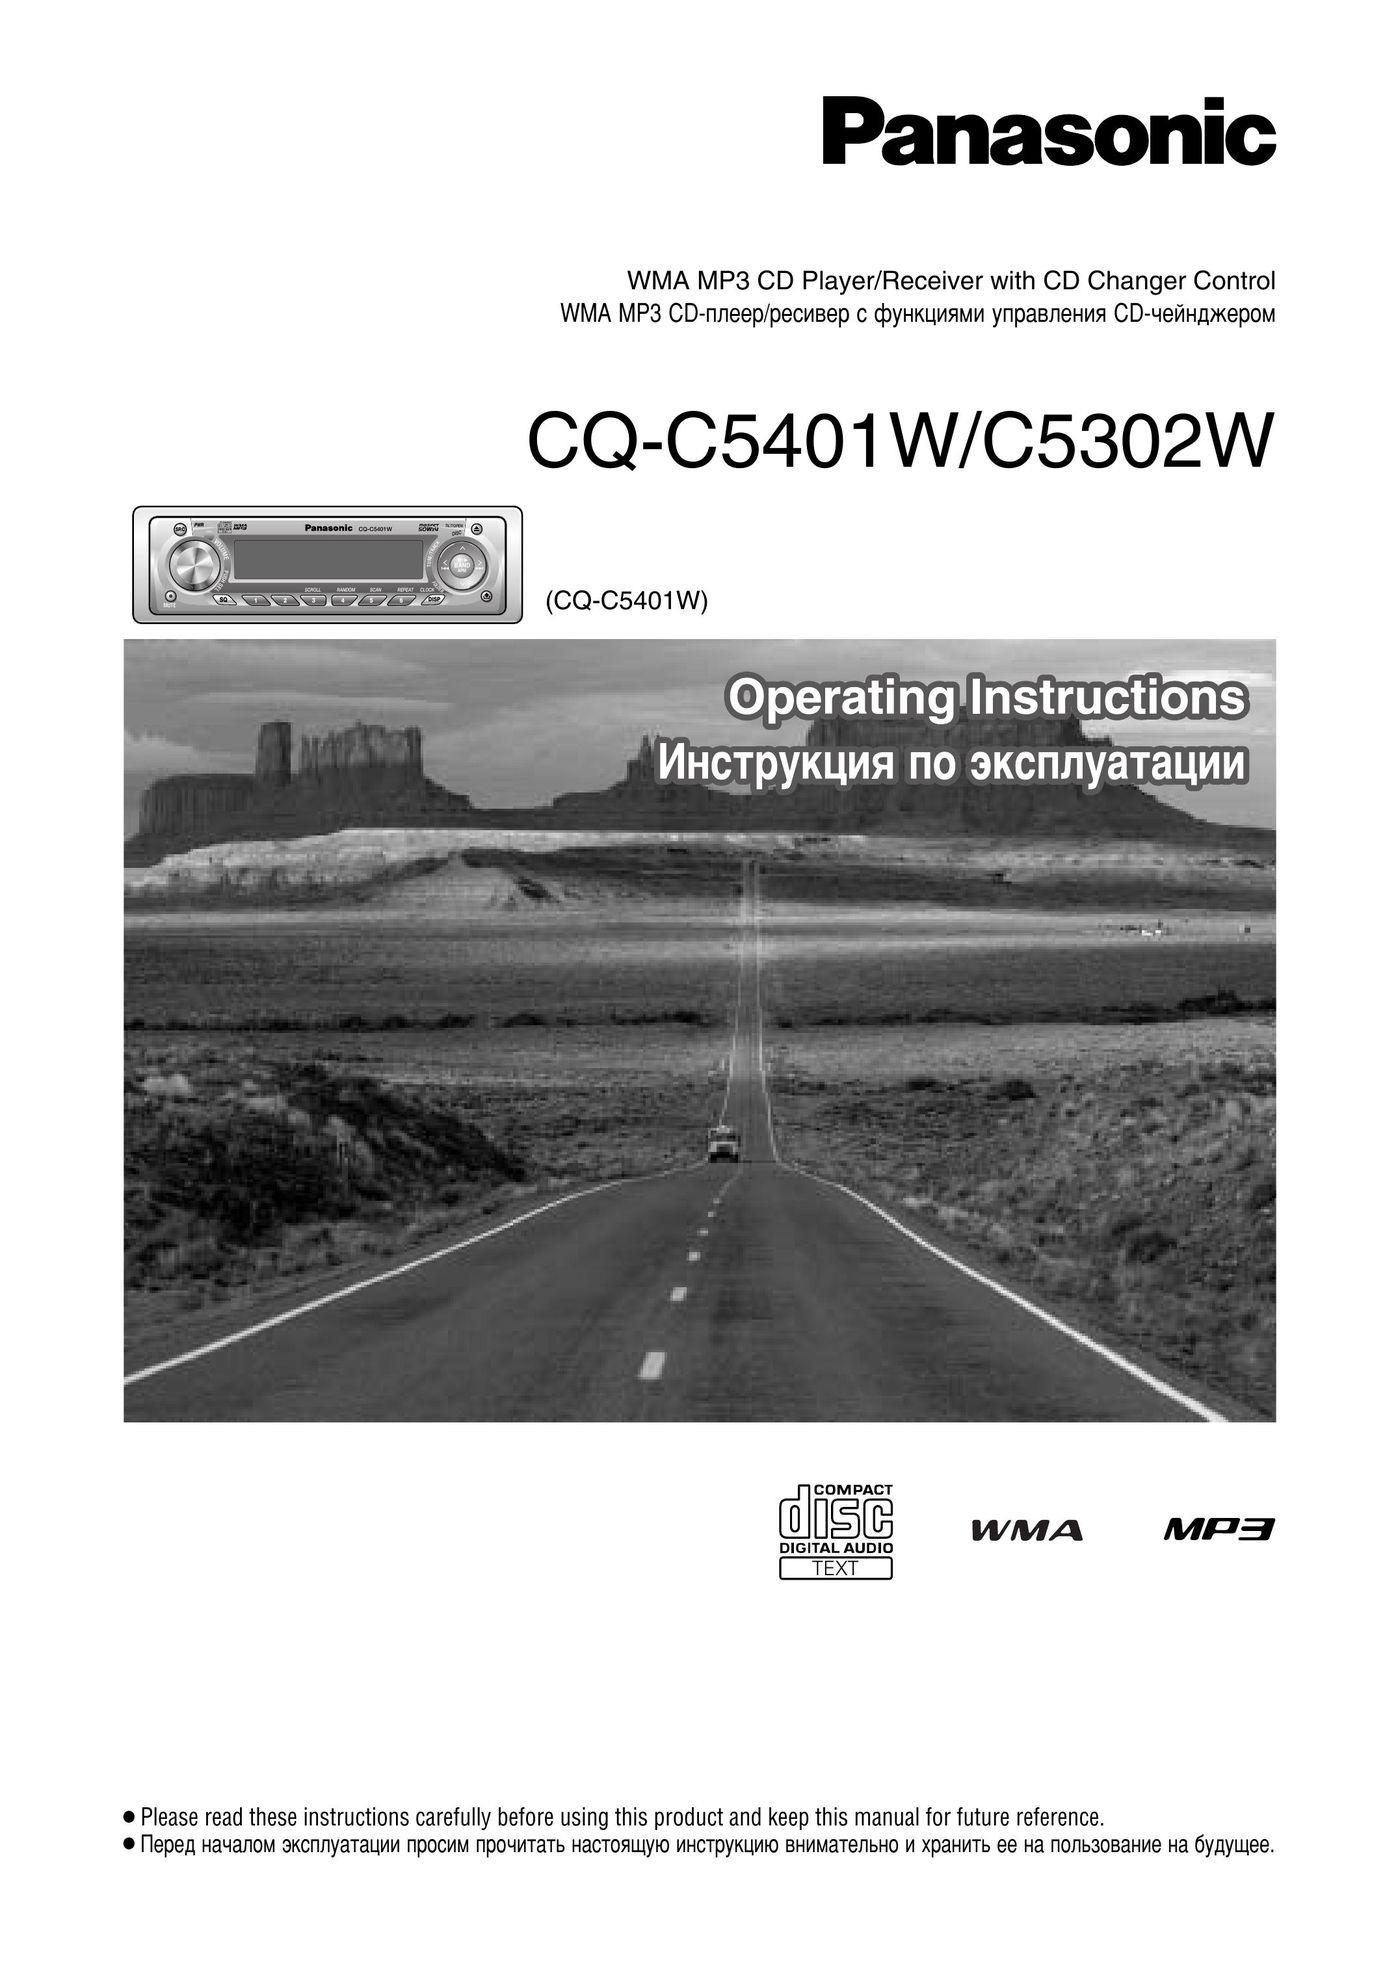 Panasonic CQ-C5401W MP3 Player User Manual